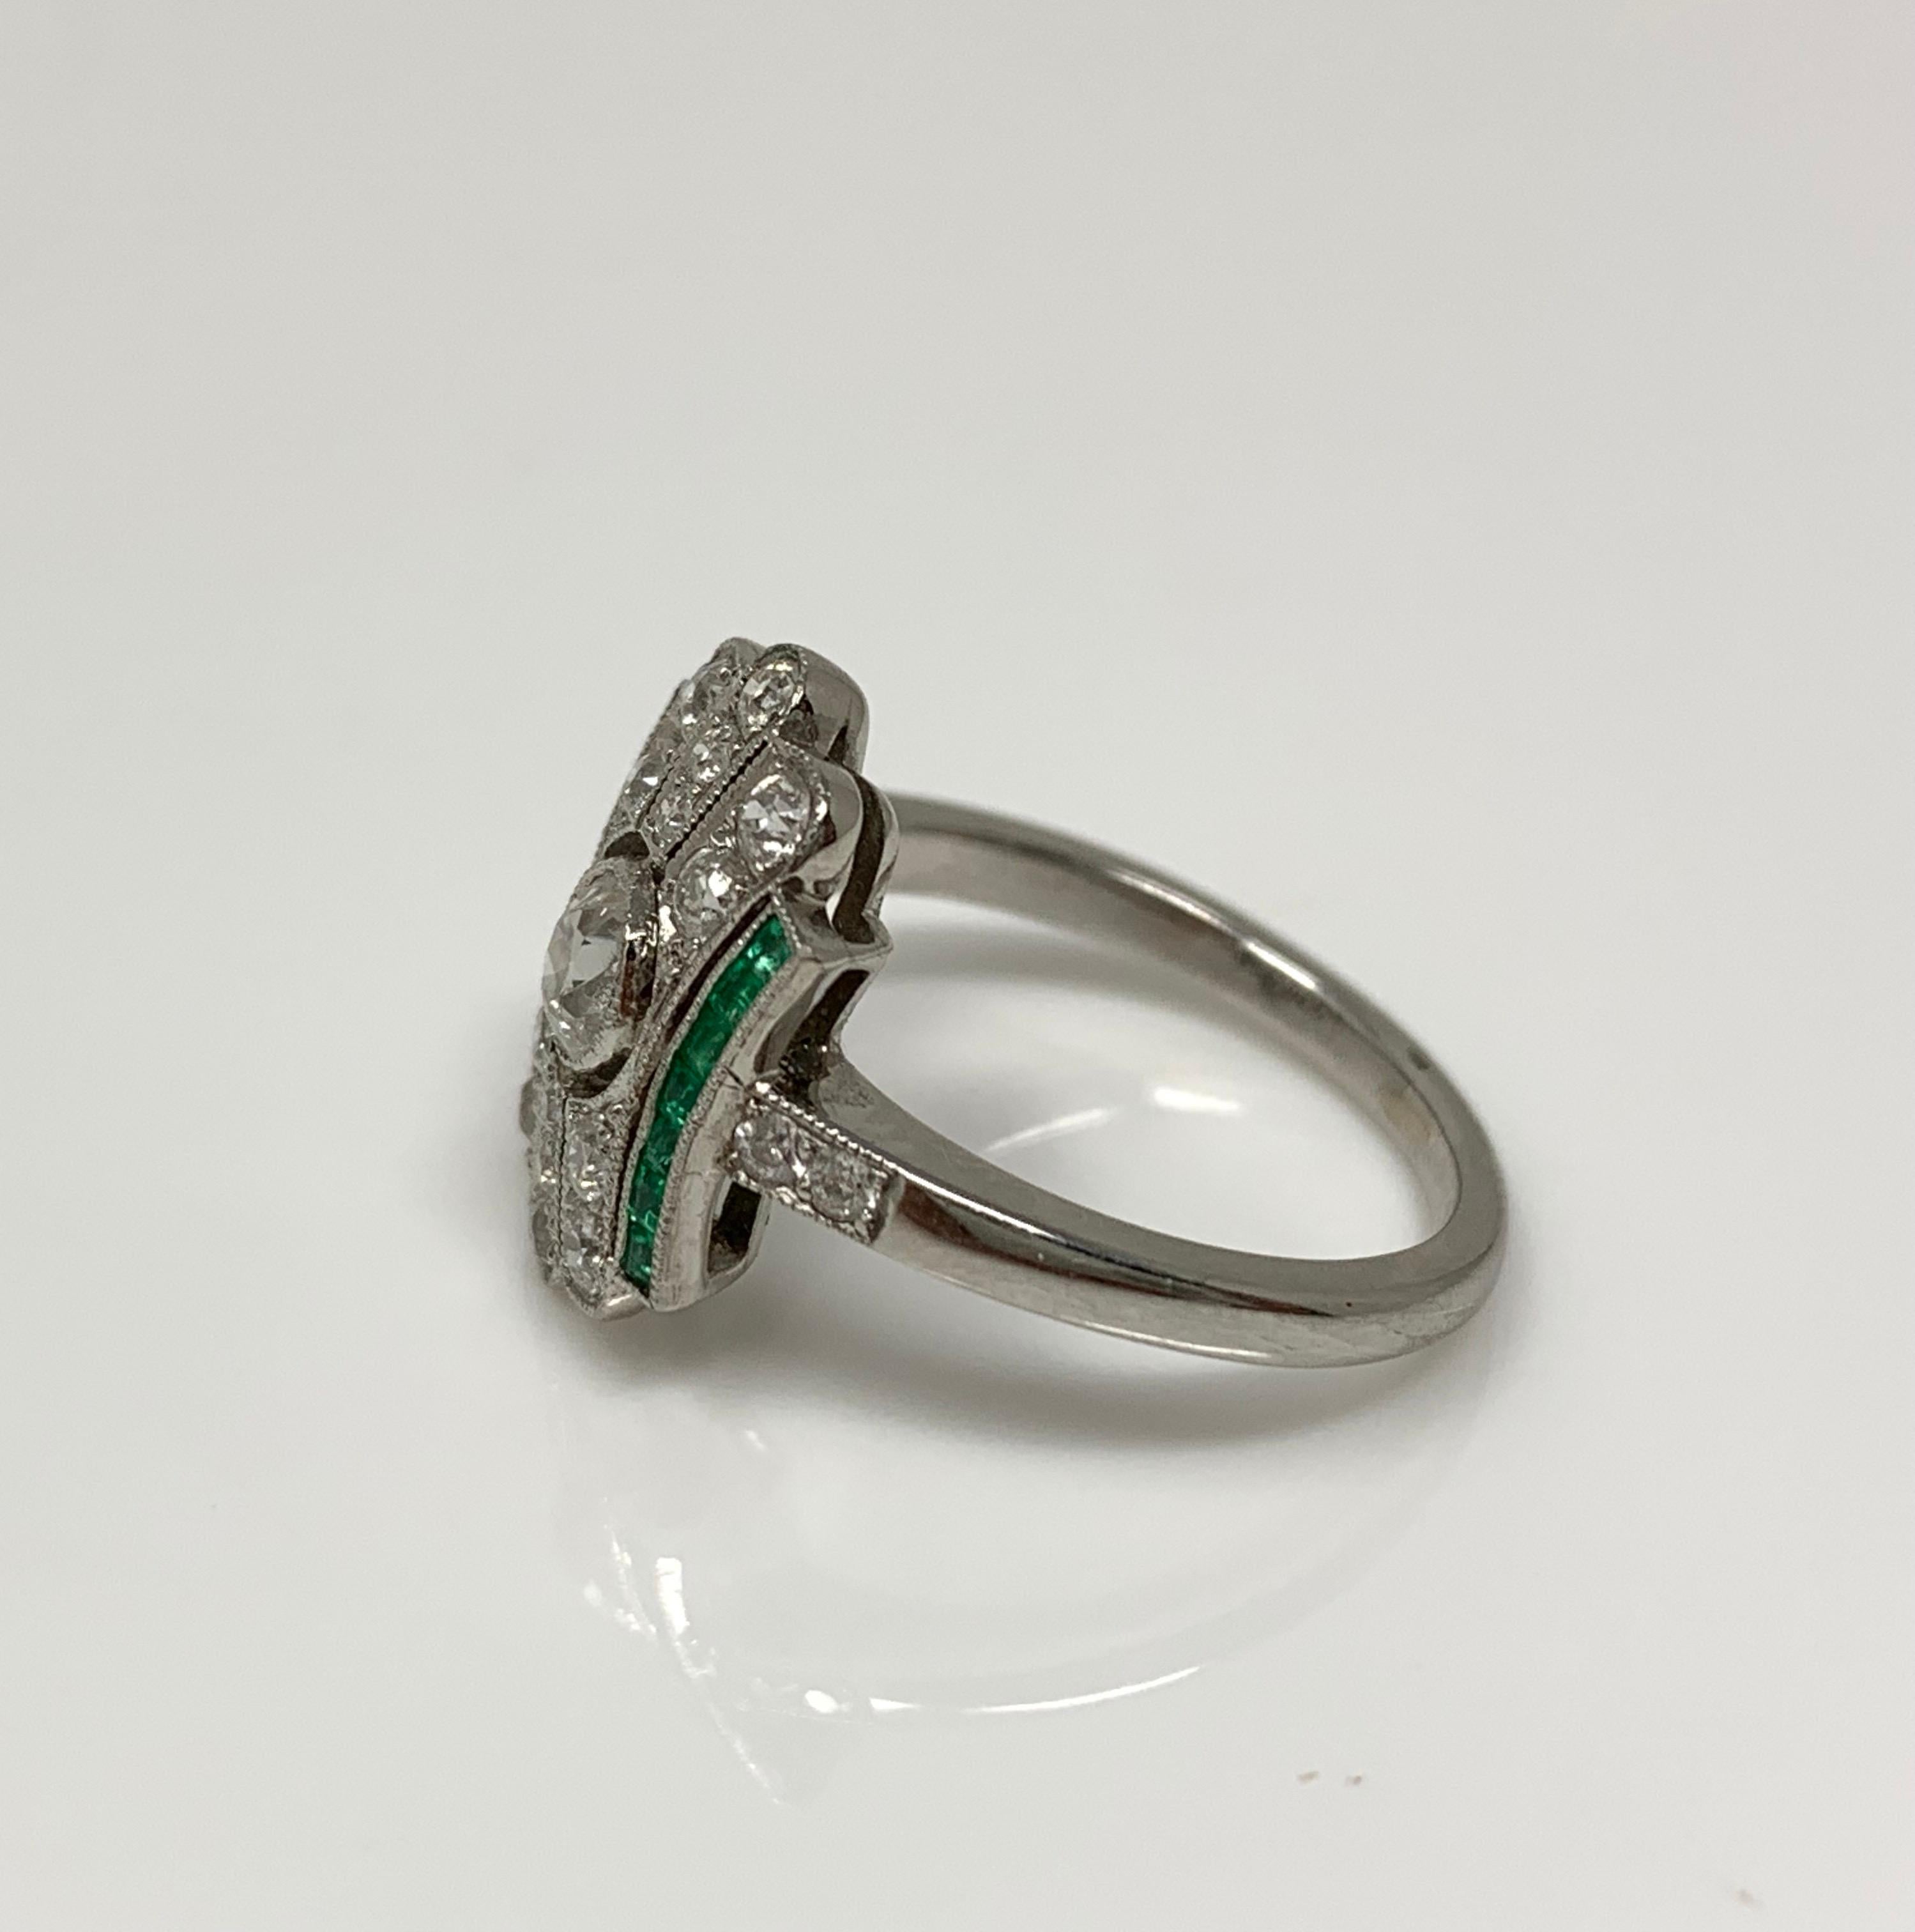  White Diamond and Emerald  Ring in Platinum. 5